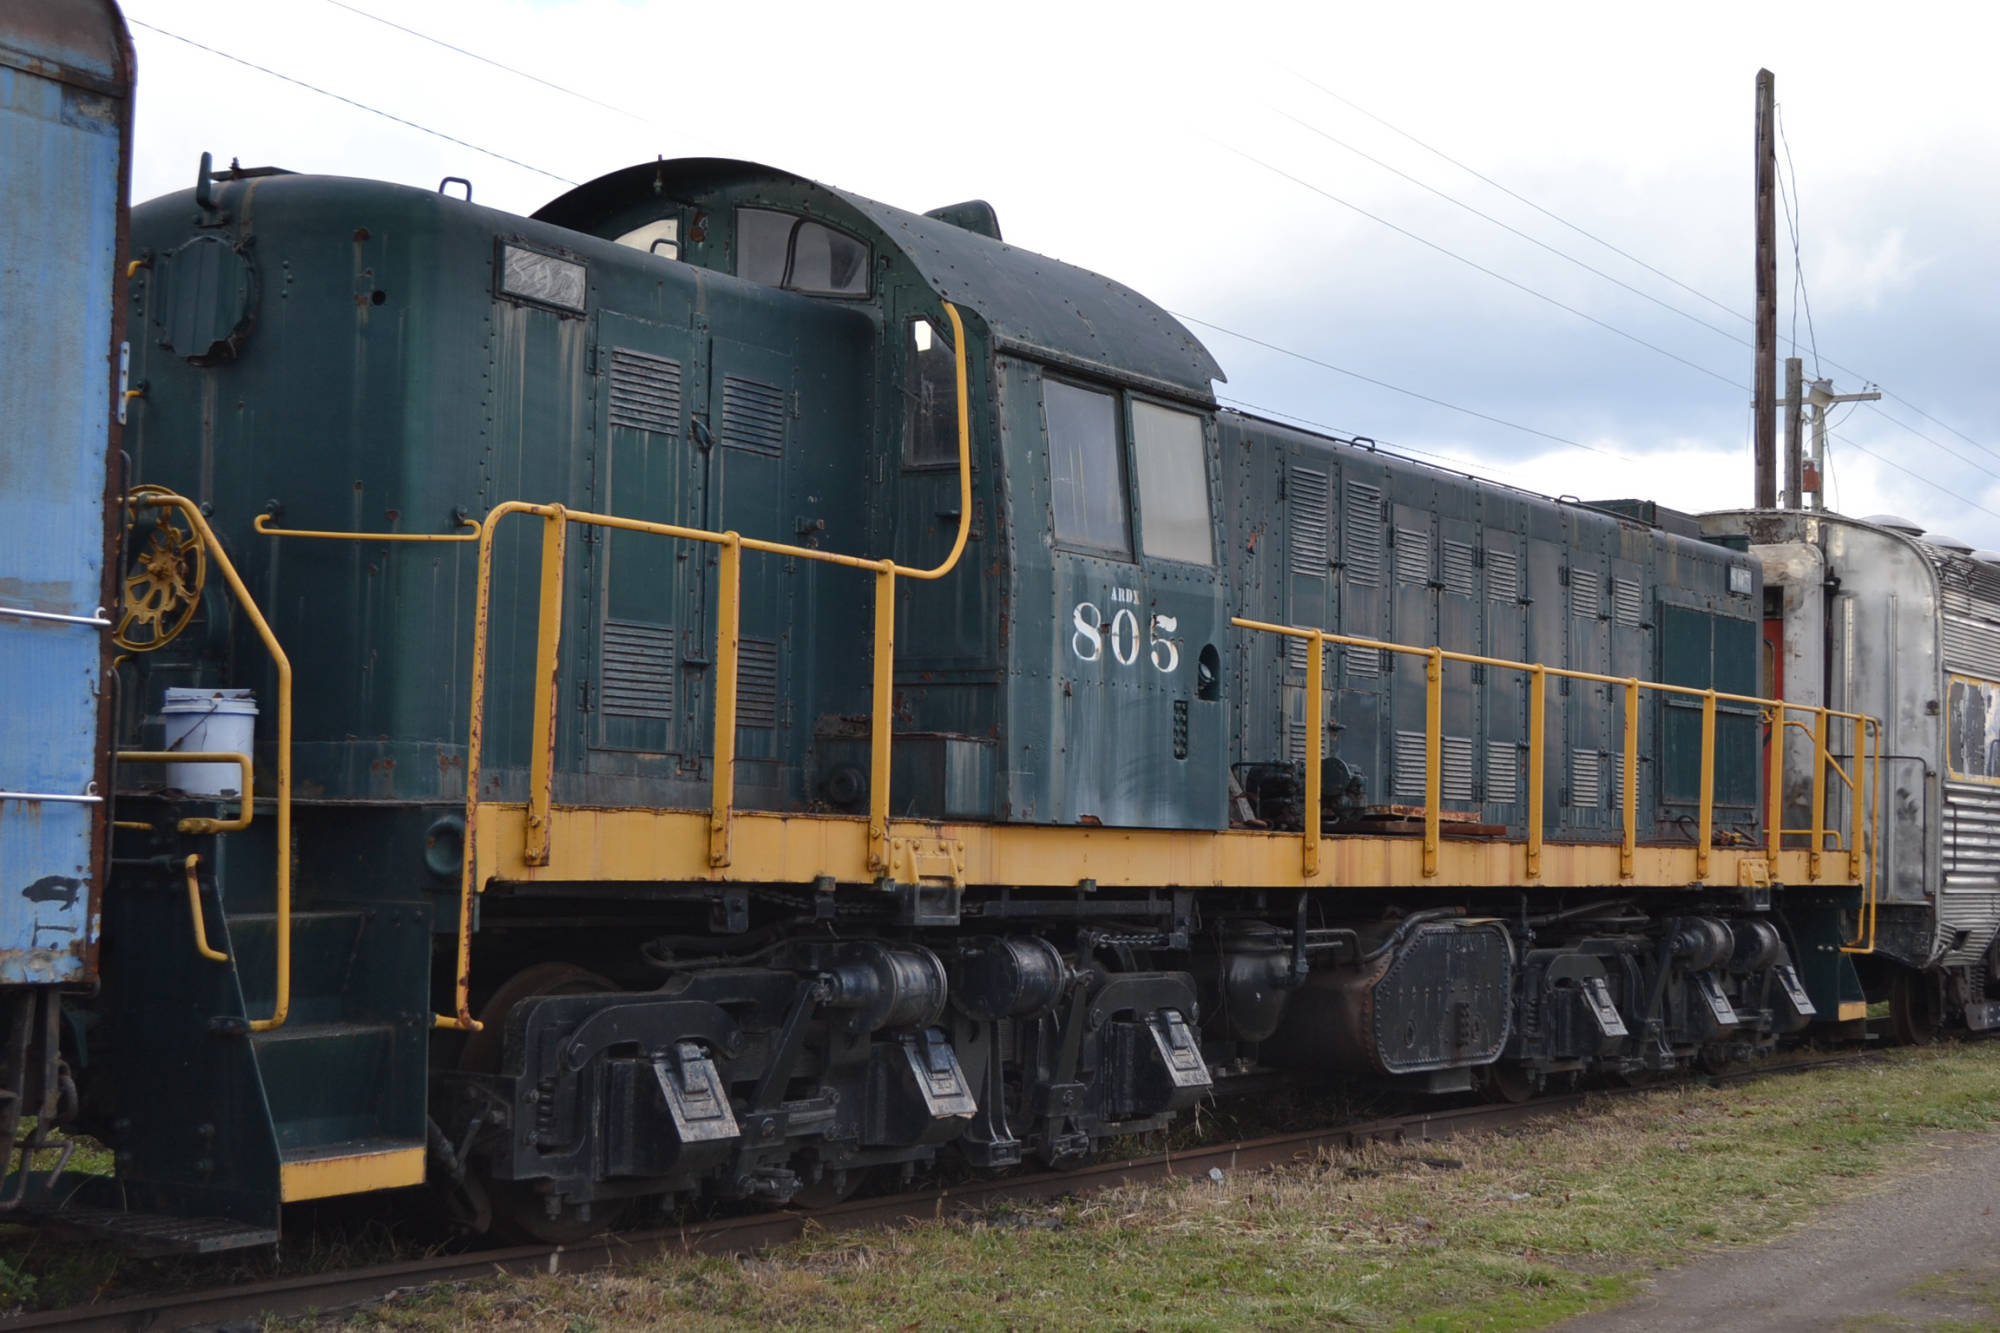 Locomotive #805 rear view